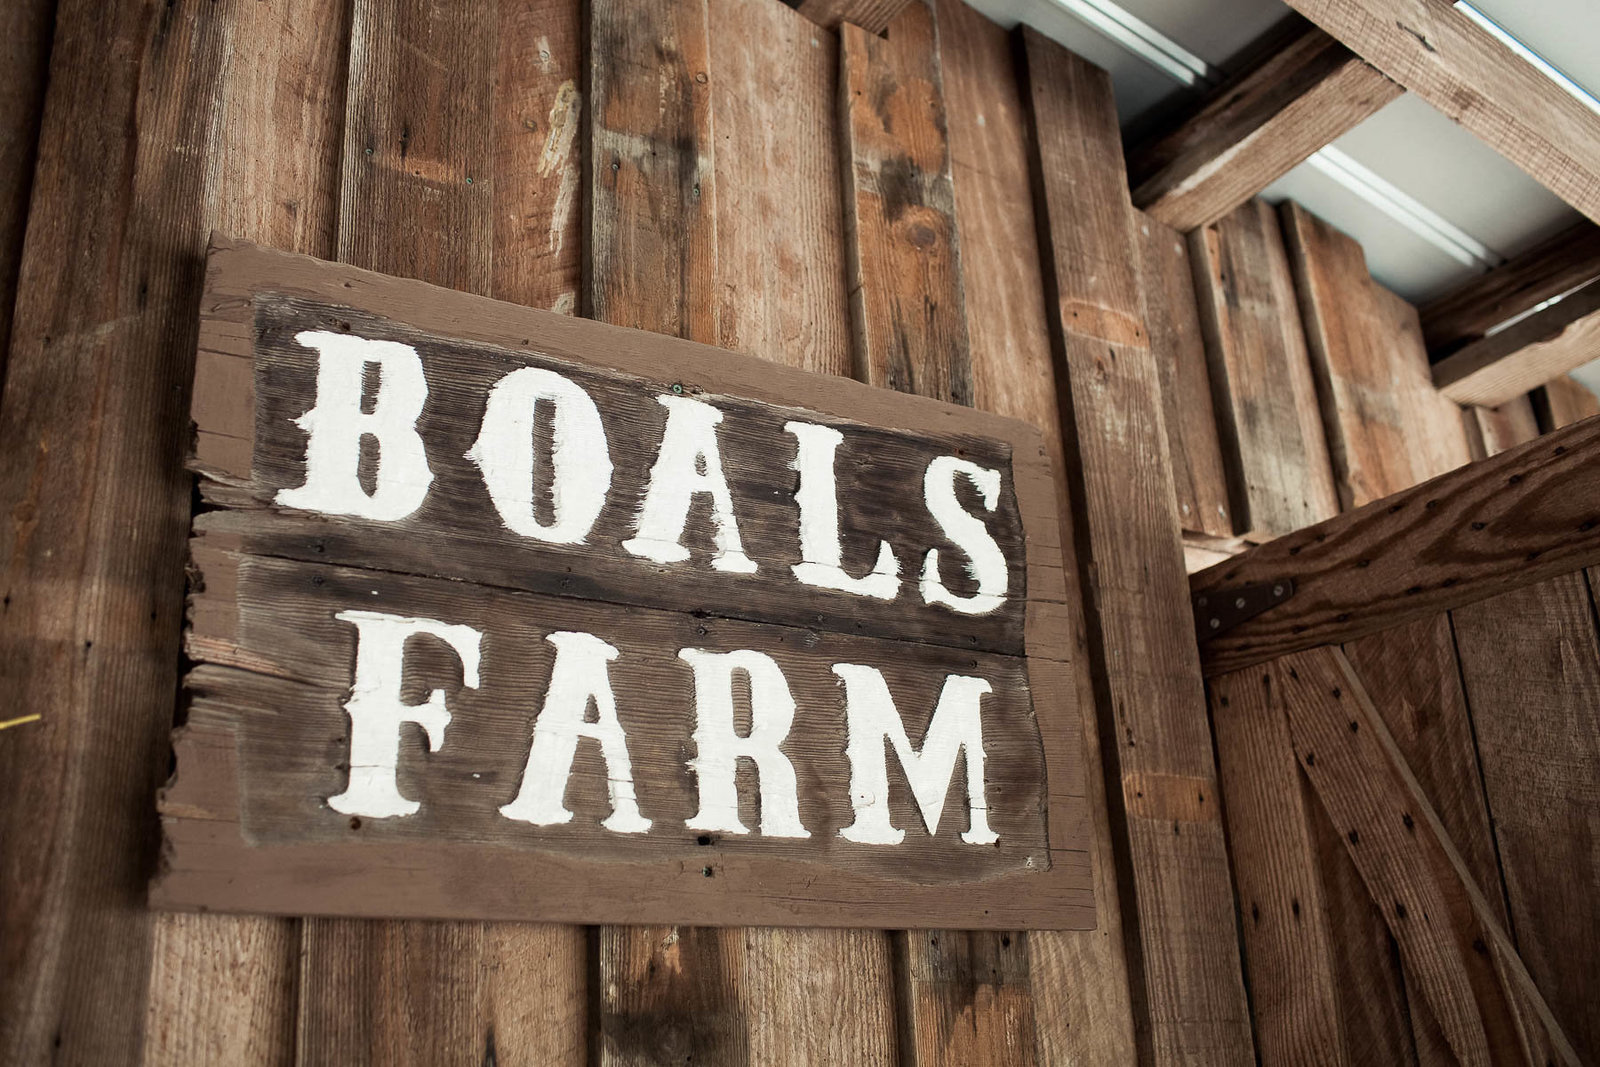 Sign of Boals Farm, Charleston, South Carolina